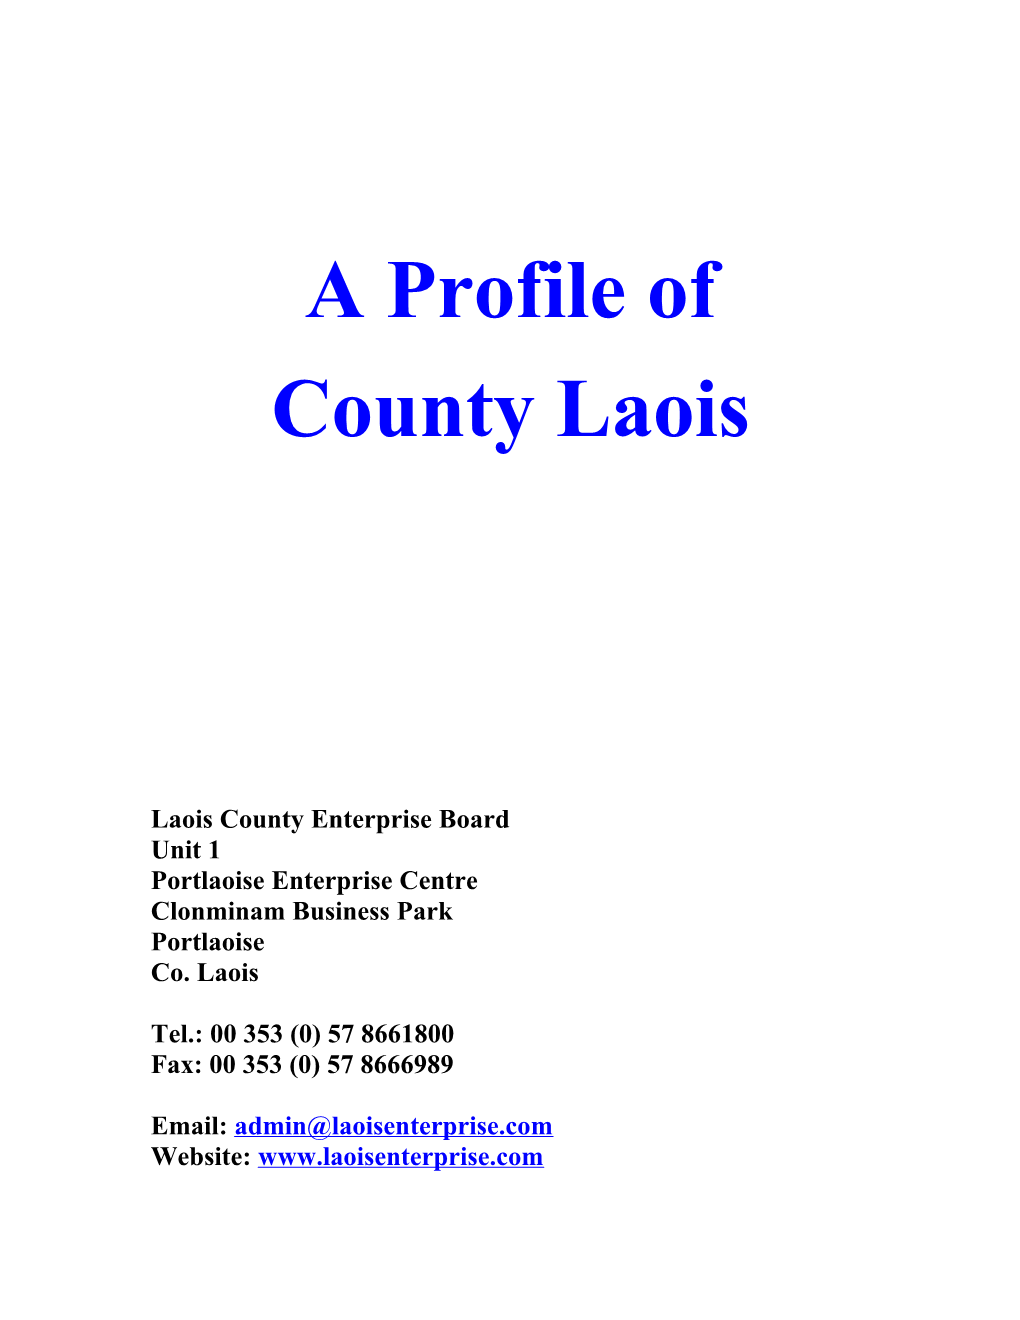 Laois County Enterprise Board